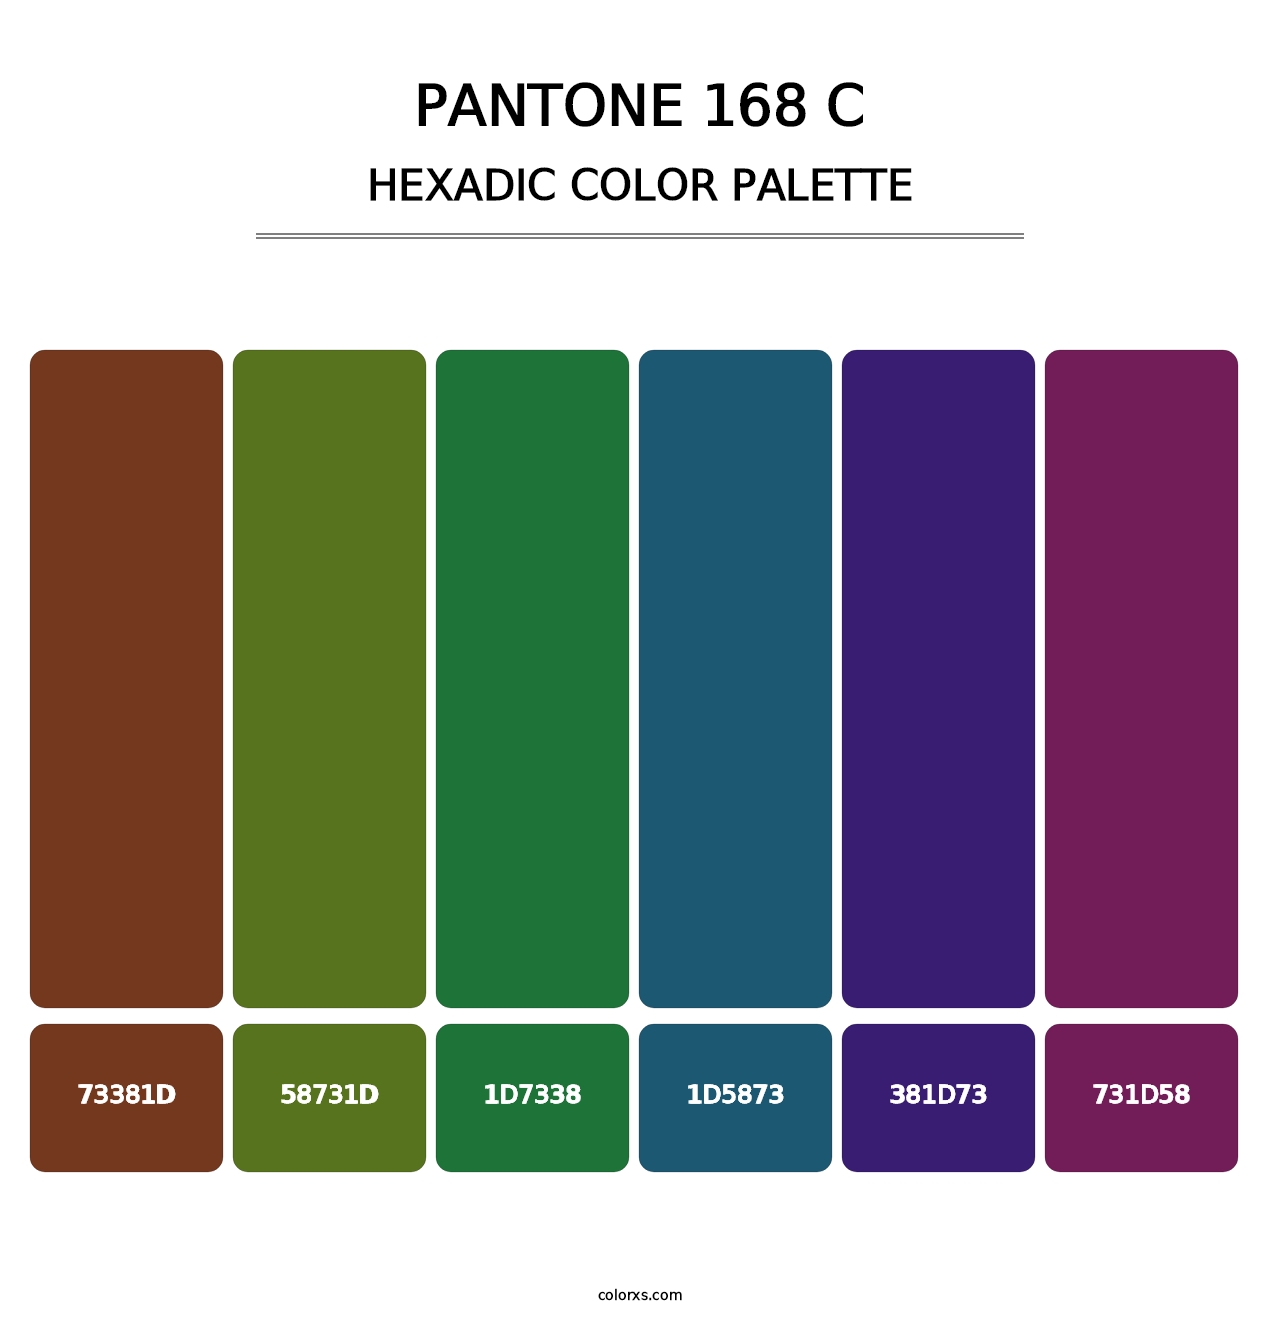 PANTONE 168 C - Hexadic Color Palette